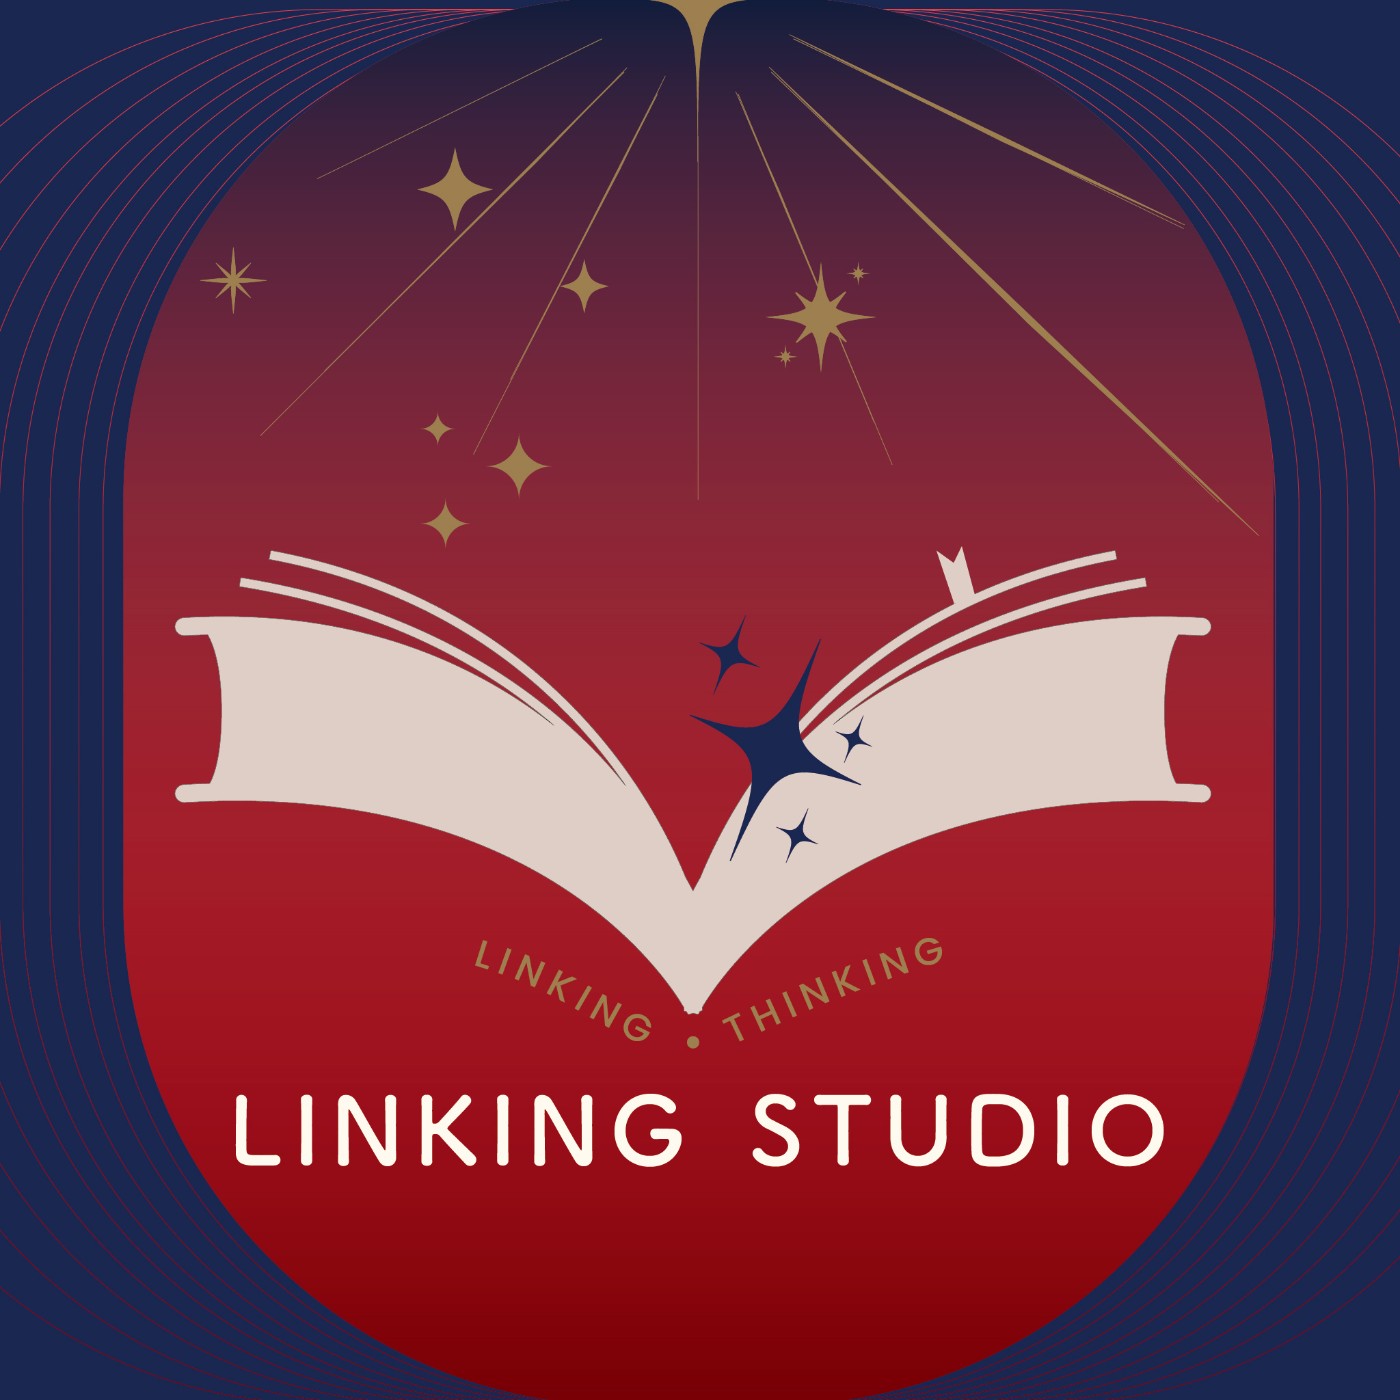 LINKING STUDIO